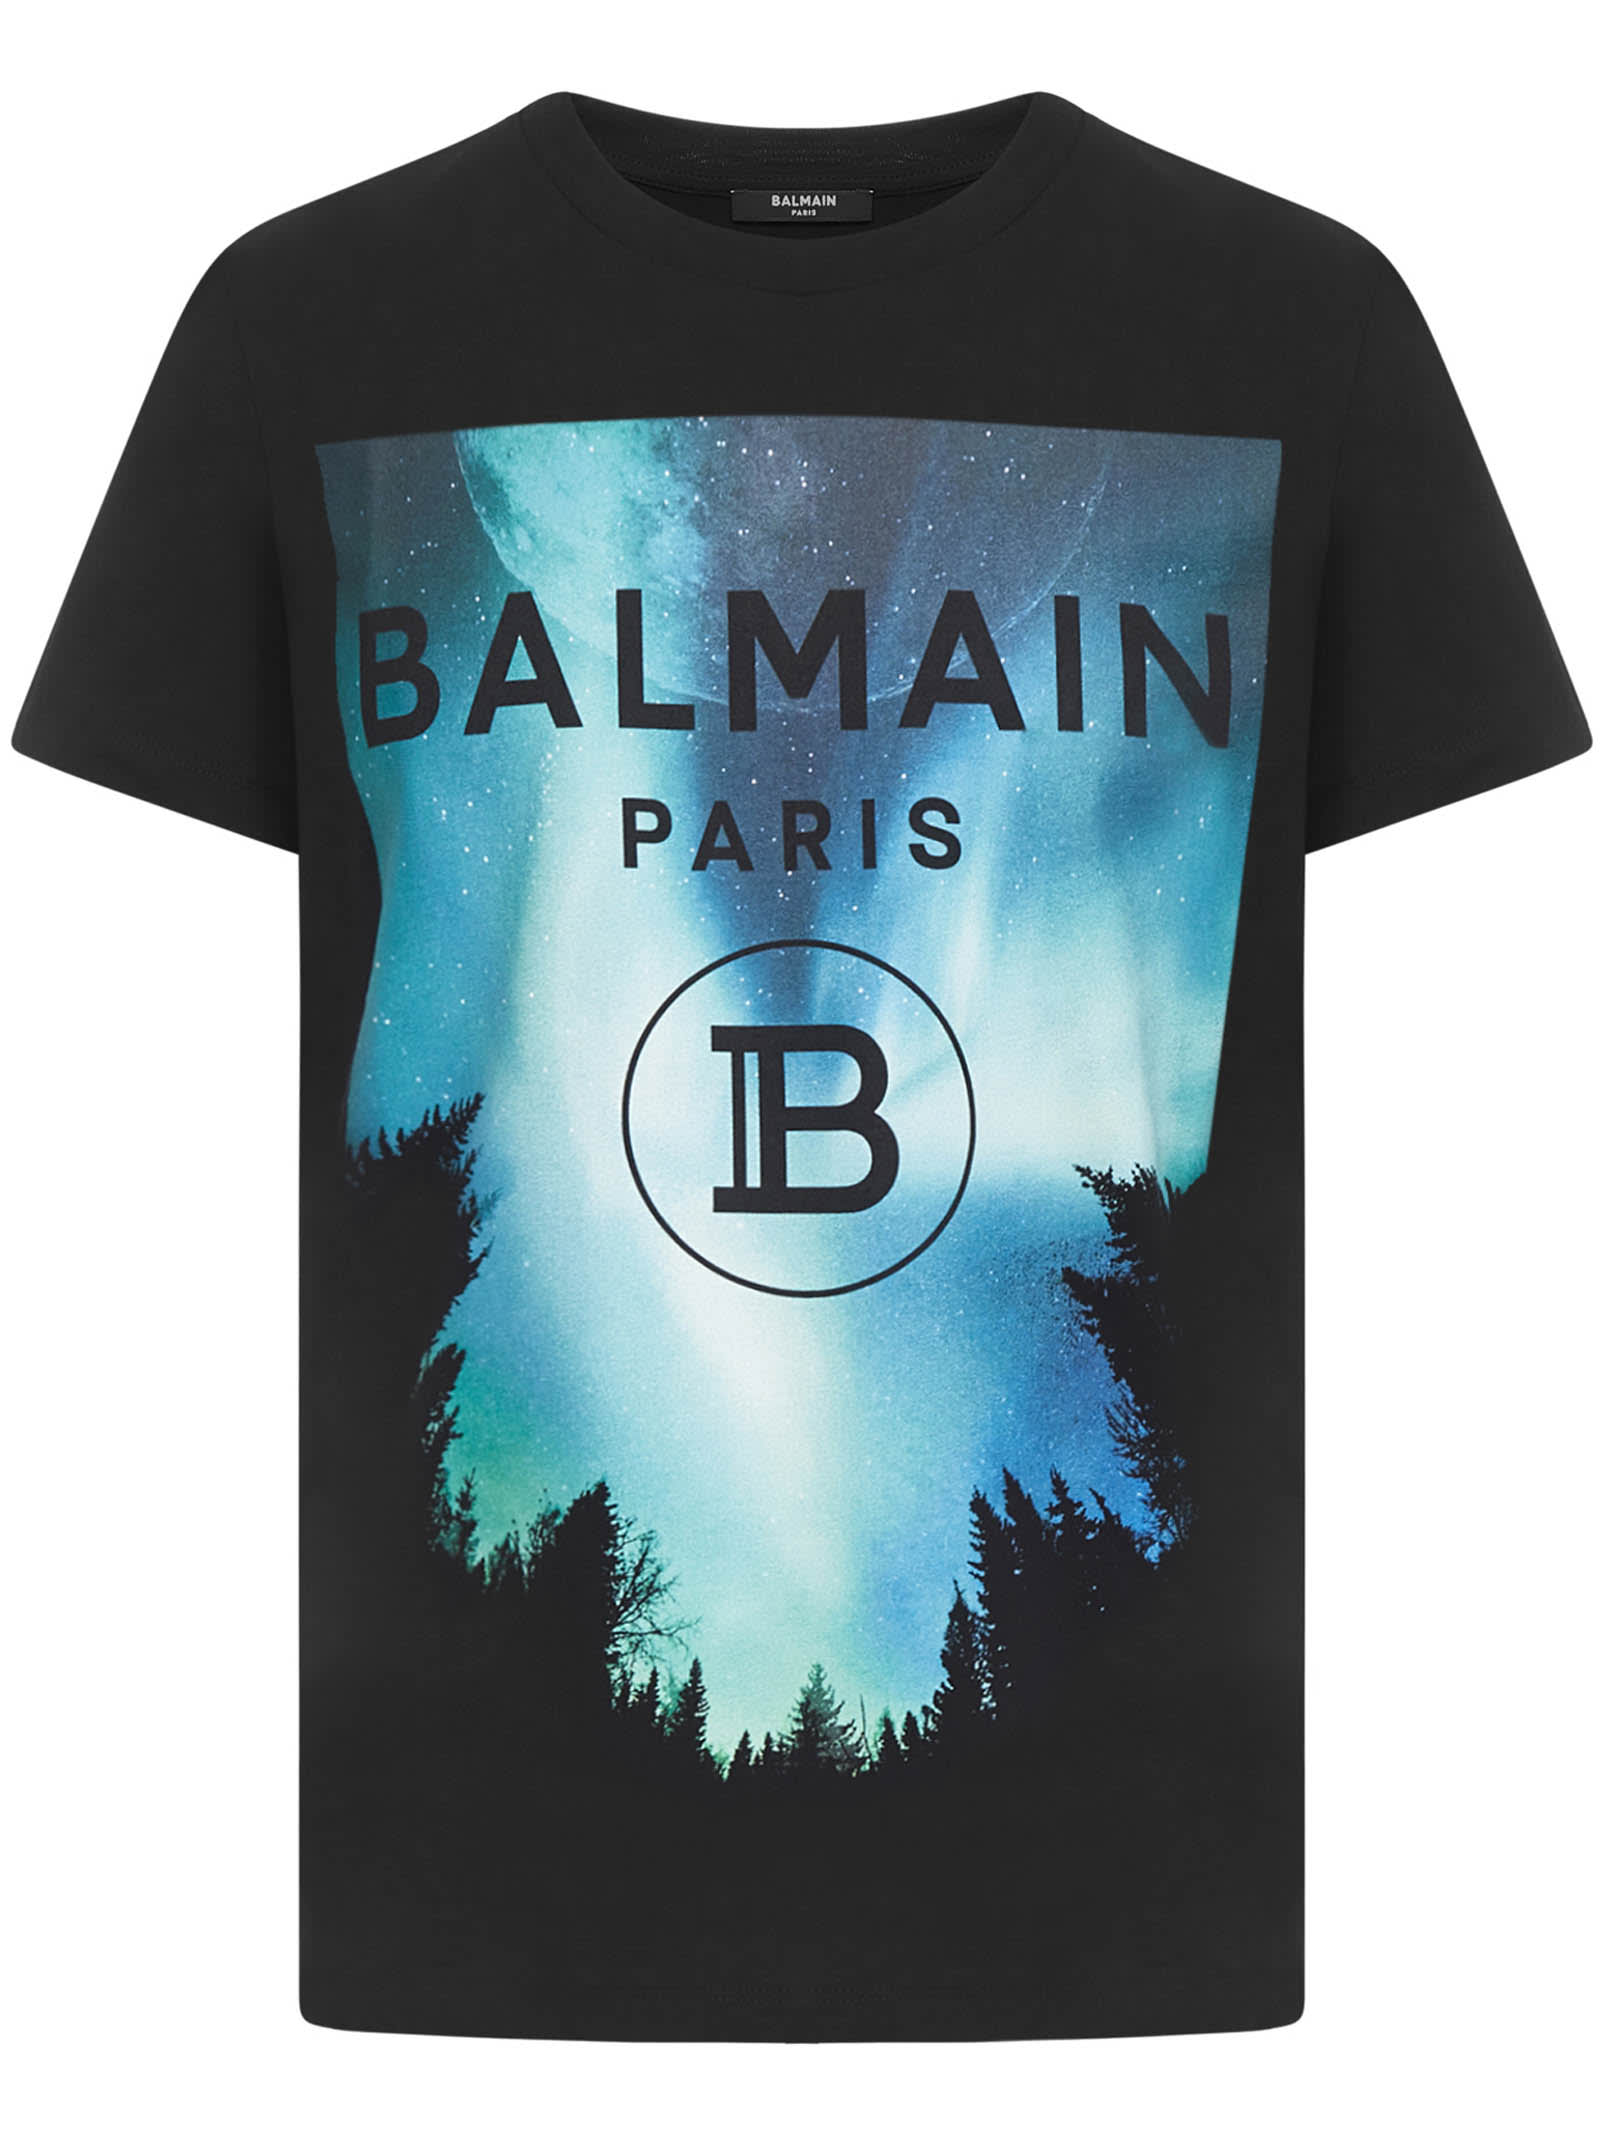 Balmain Paris T-shirt In Multicolor | ModeSens